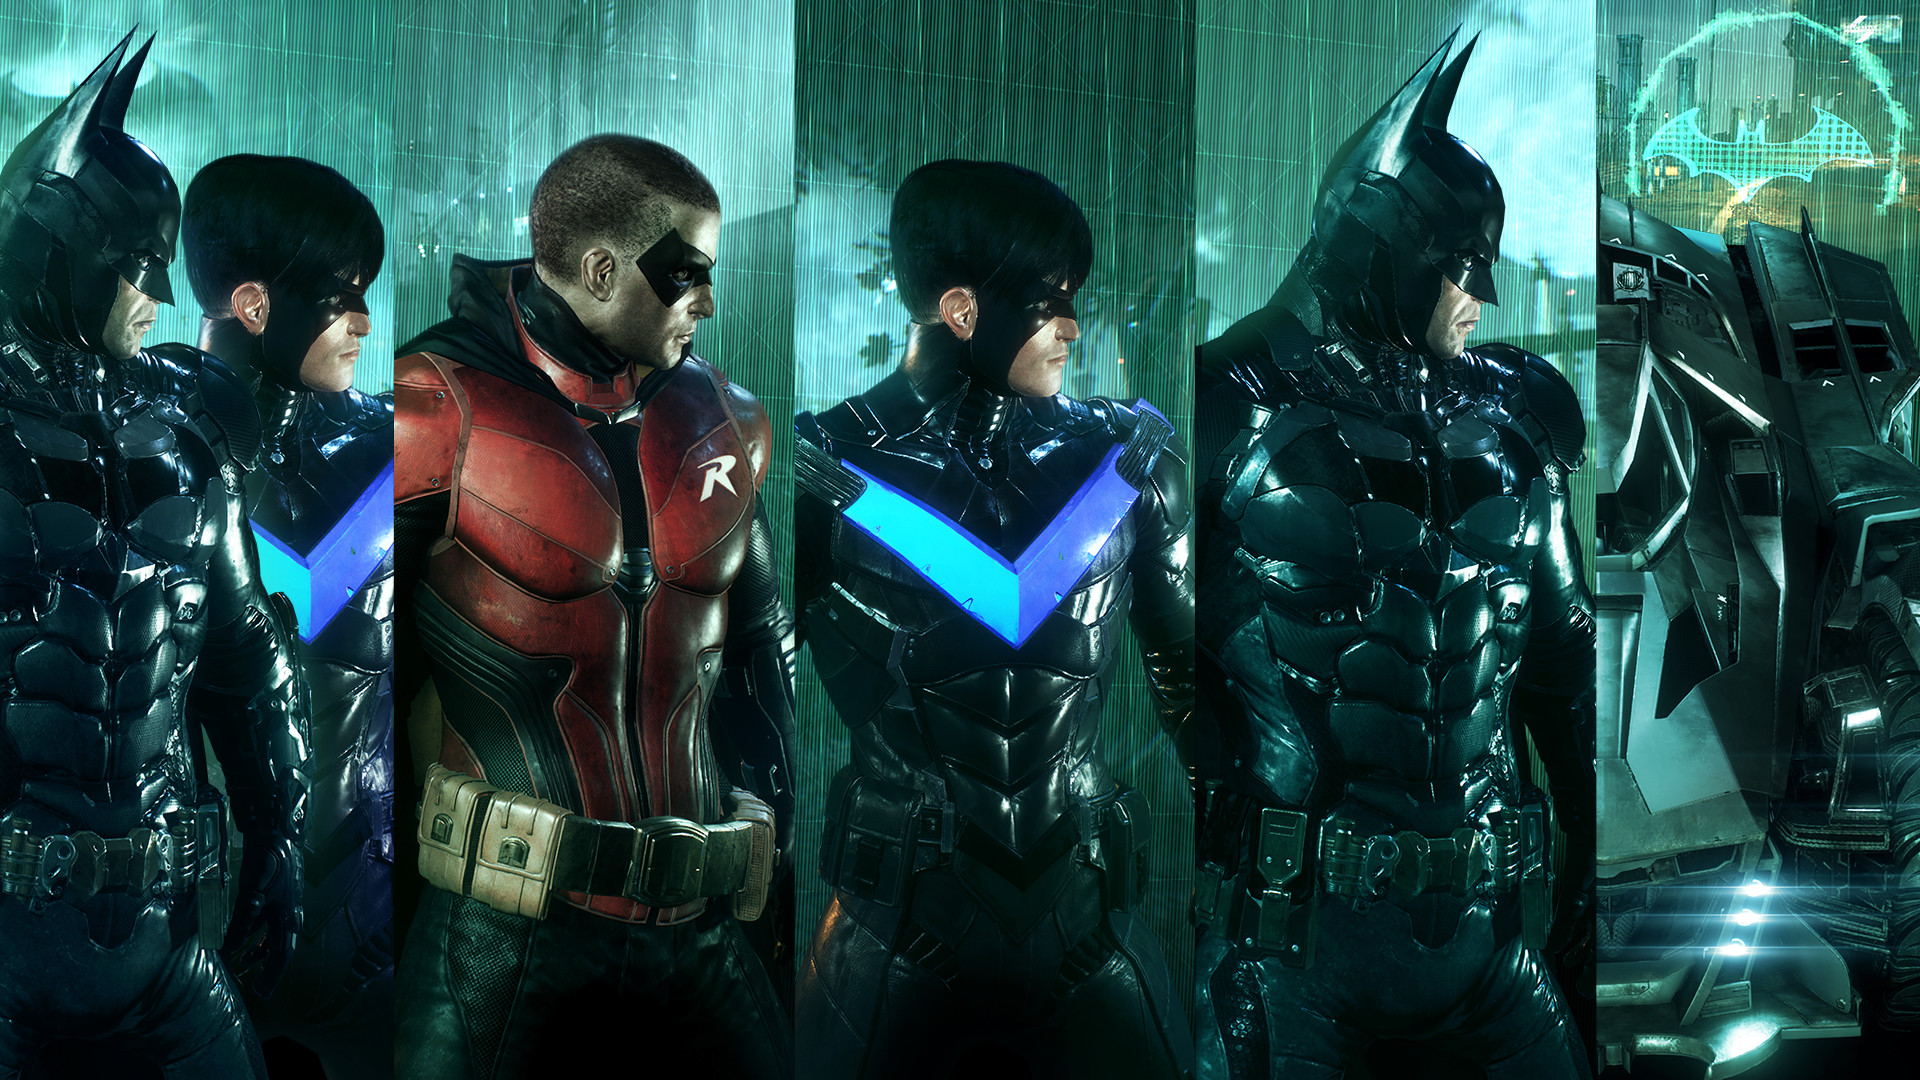 Batman™: Arkham Knight - Robin and Batmobile Skins Pack on Steam